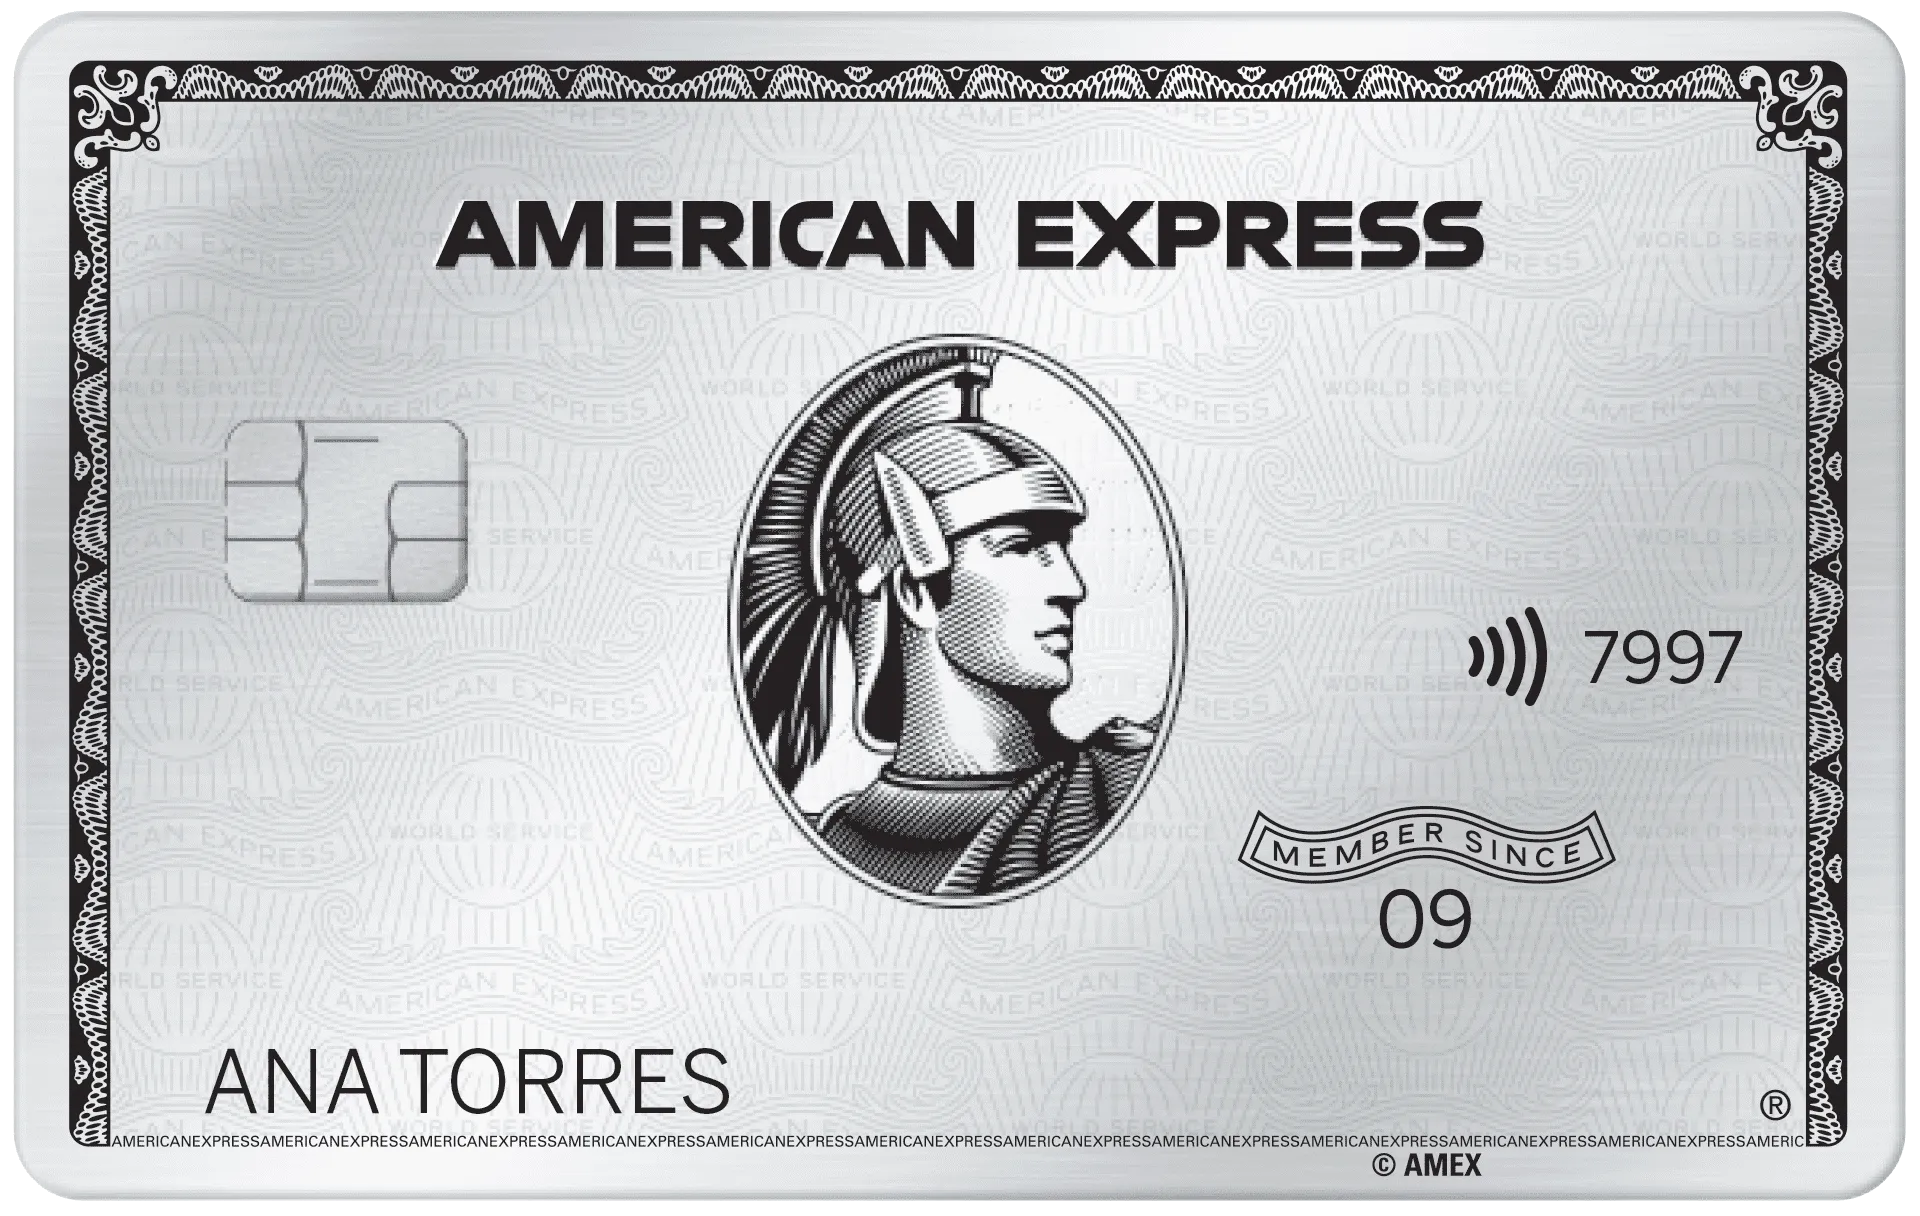 Vive la experiencia premium con la tarjeta de servicio The Platinum Card American Express